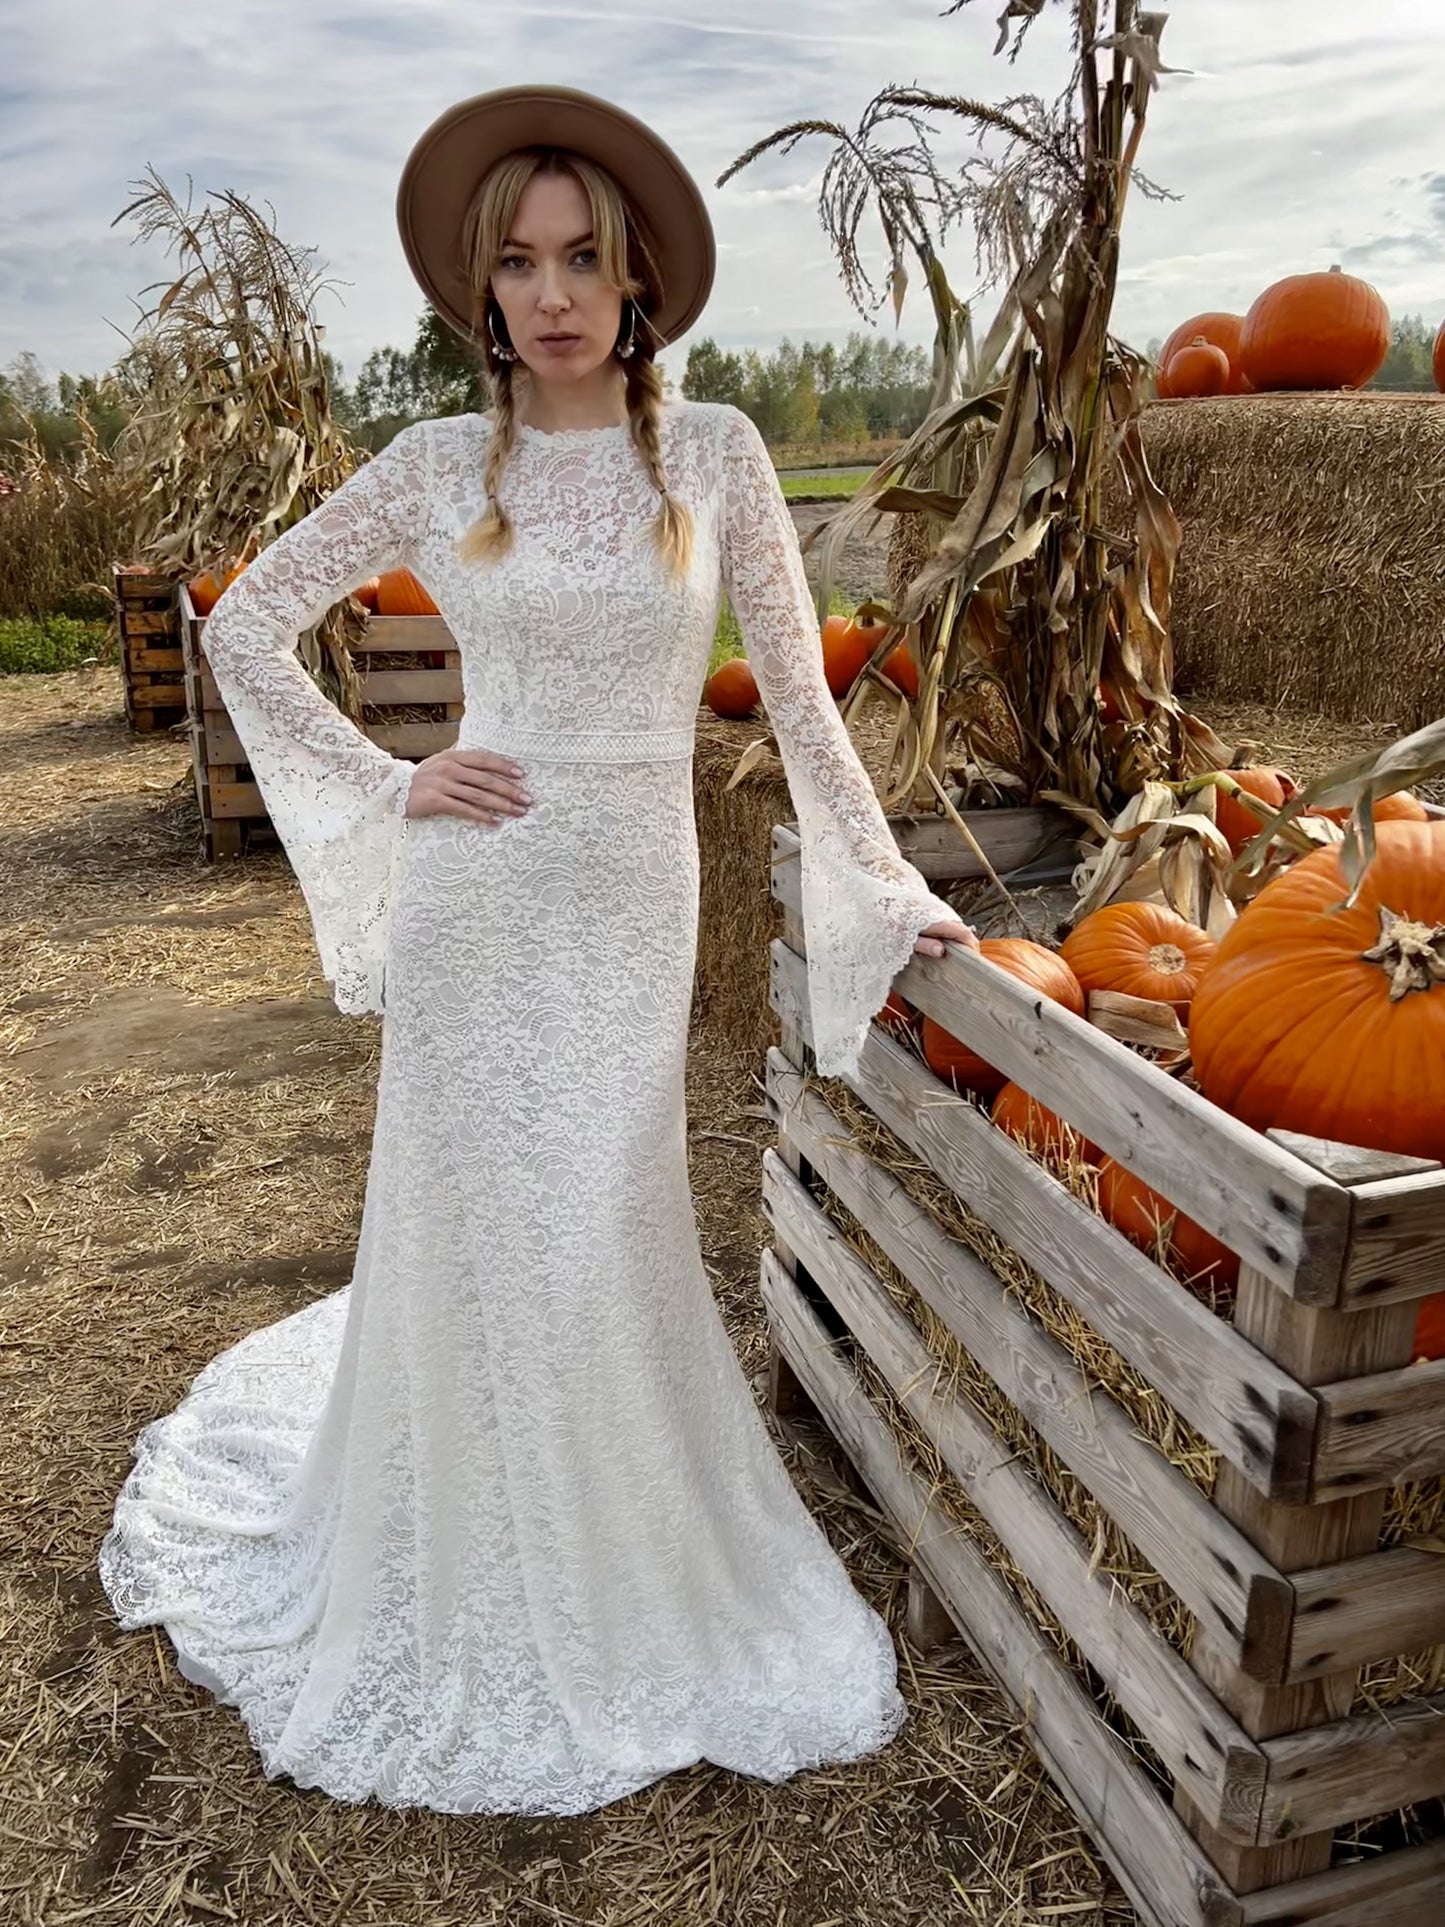 Wedding Dress "Heaven"